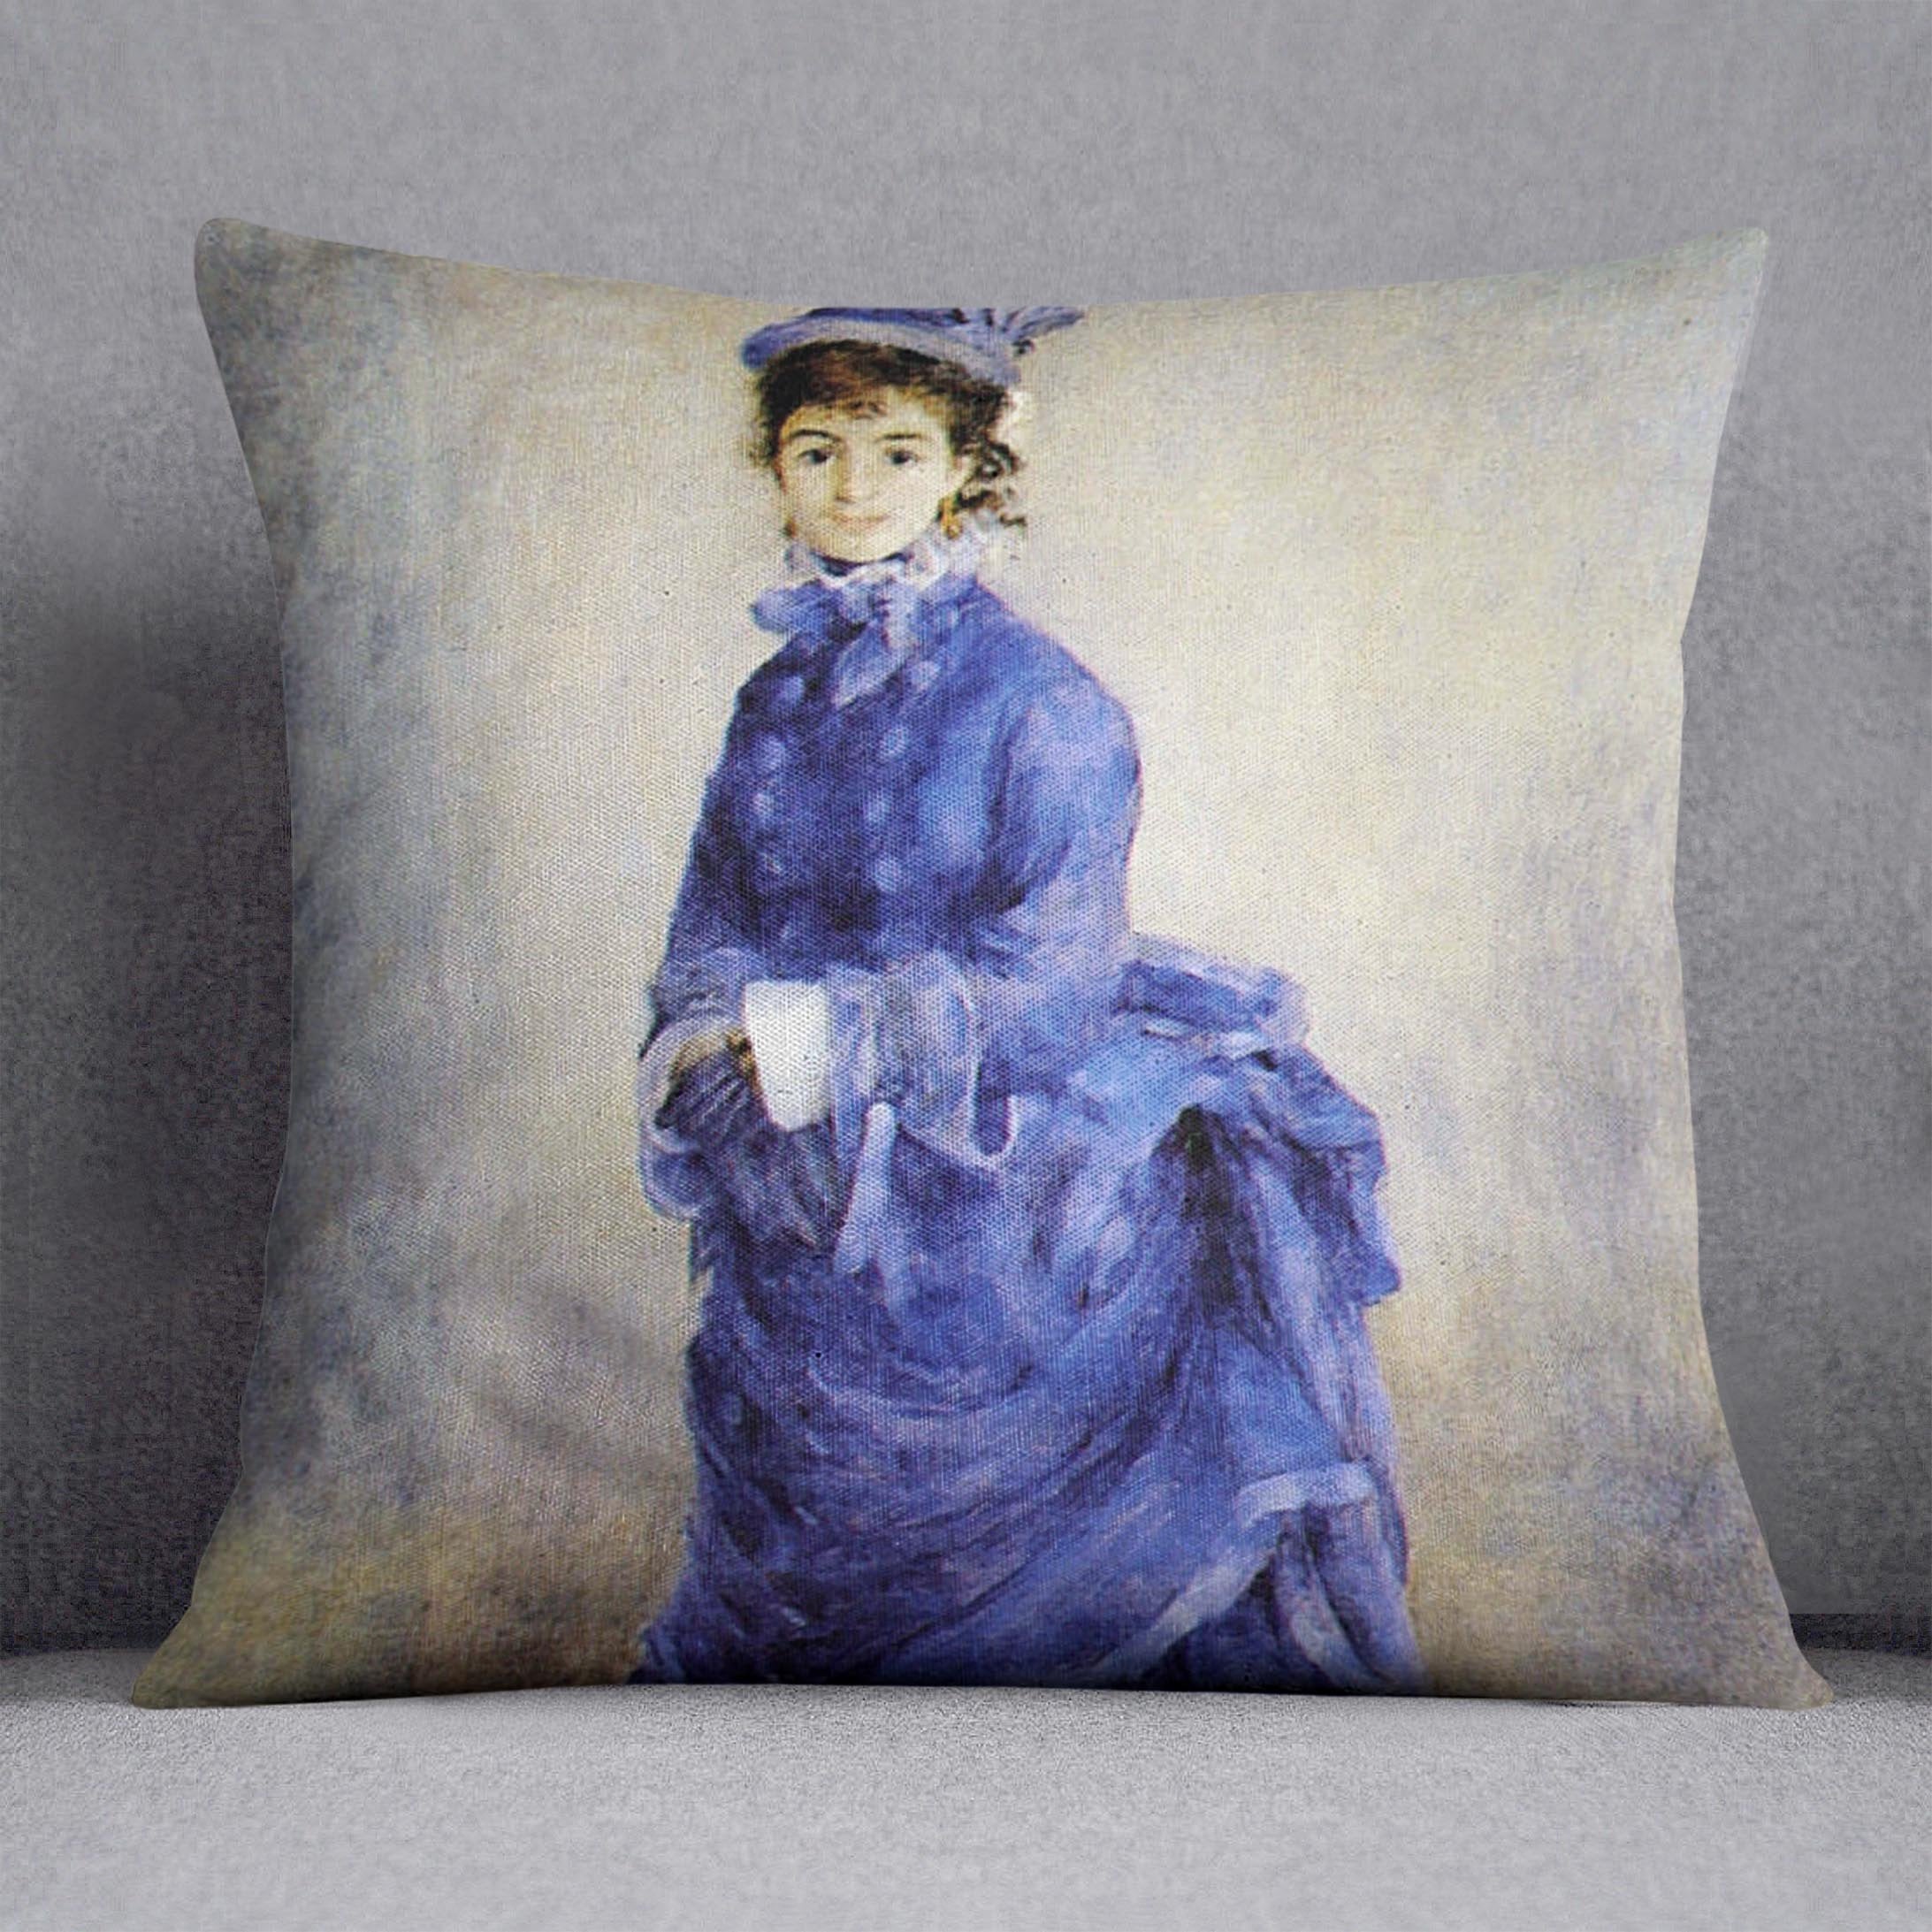 The parisian by Renoir Throw Pillow